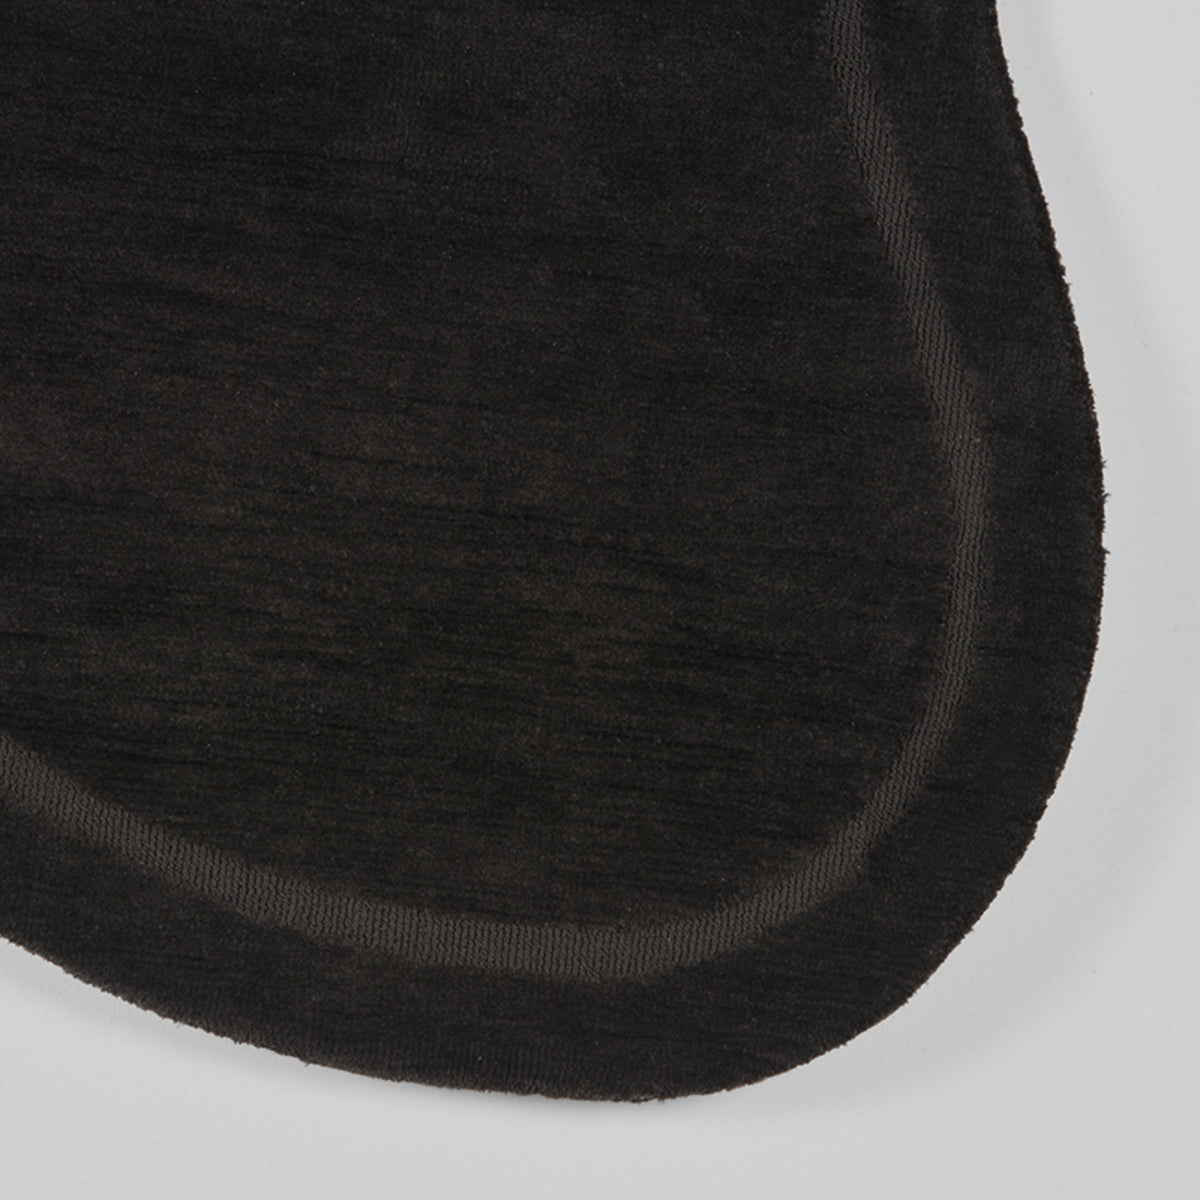 LABEL51 Vloerkleden Mody - Zwart - Synthetisch - 200x300 cm